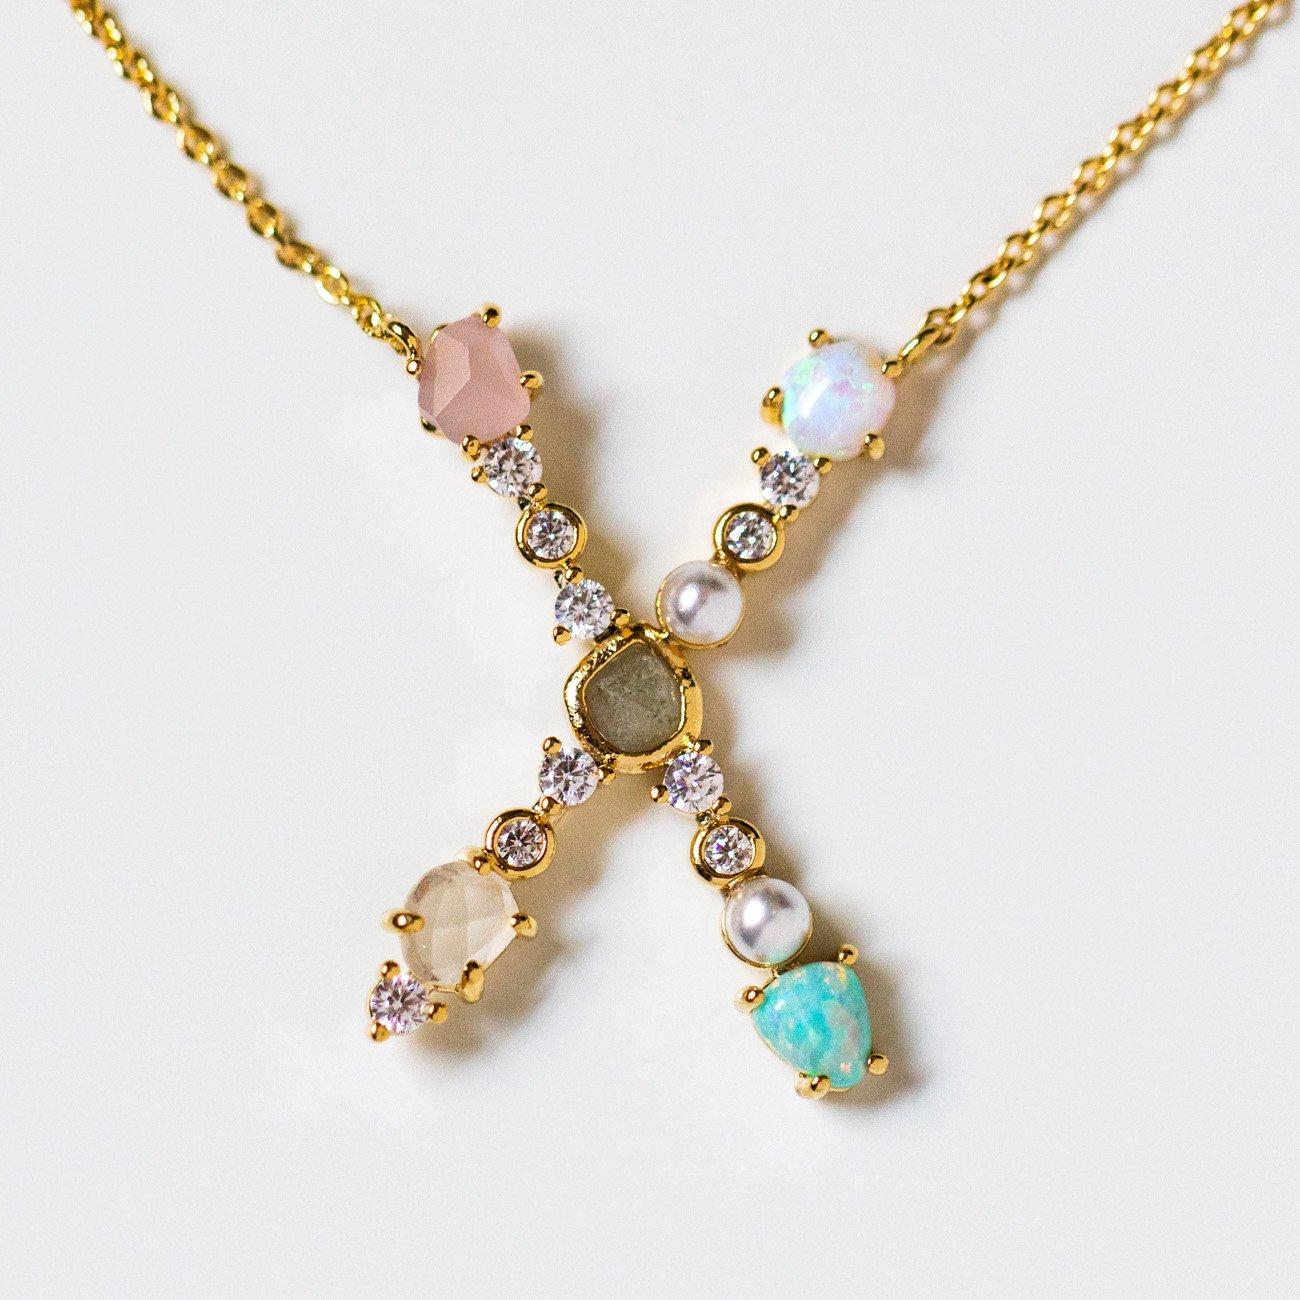 x initial stone monogram pendant necklace statement personalized jewelry